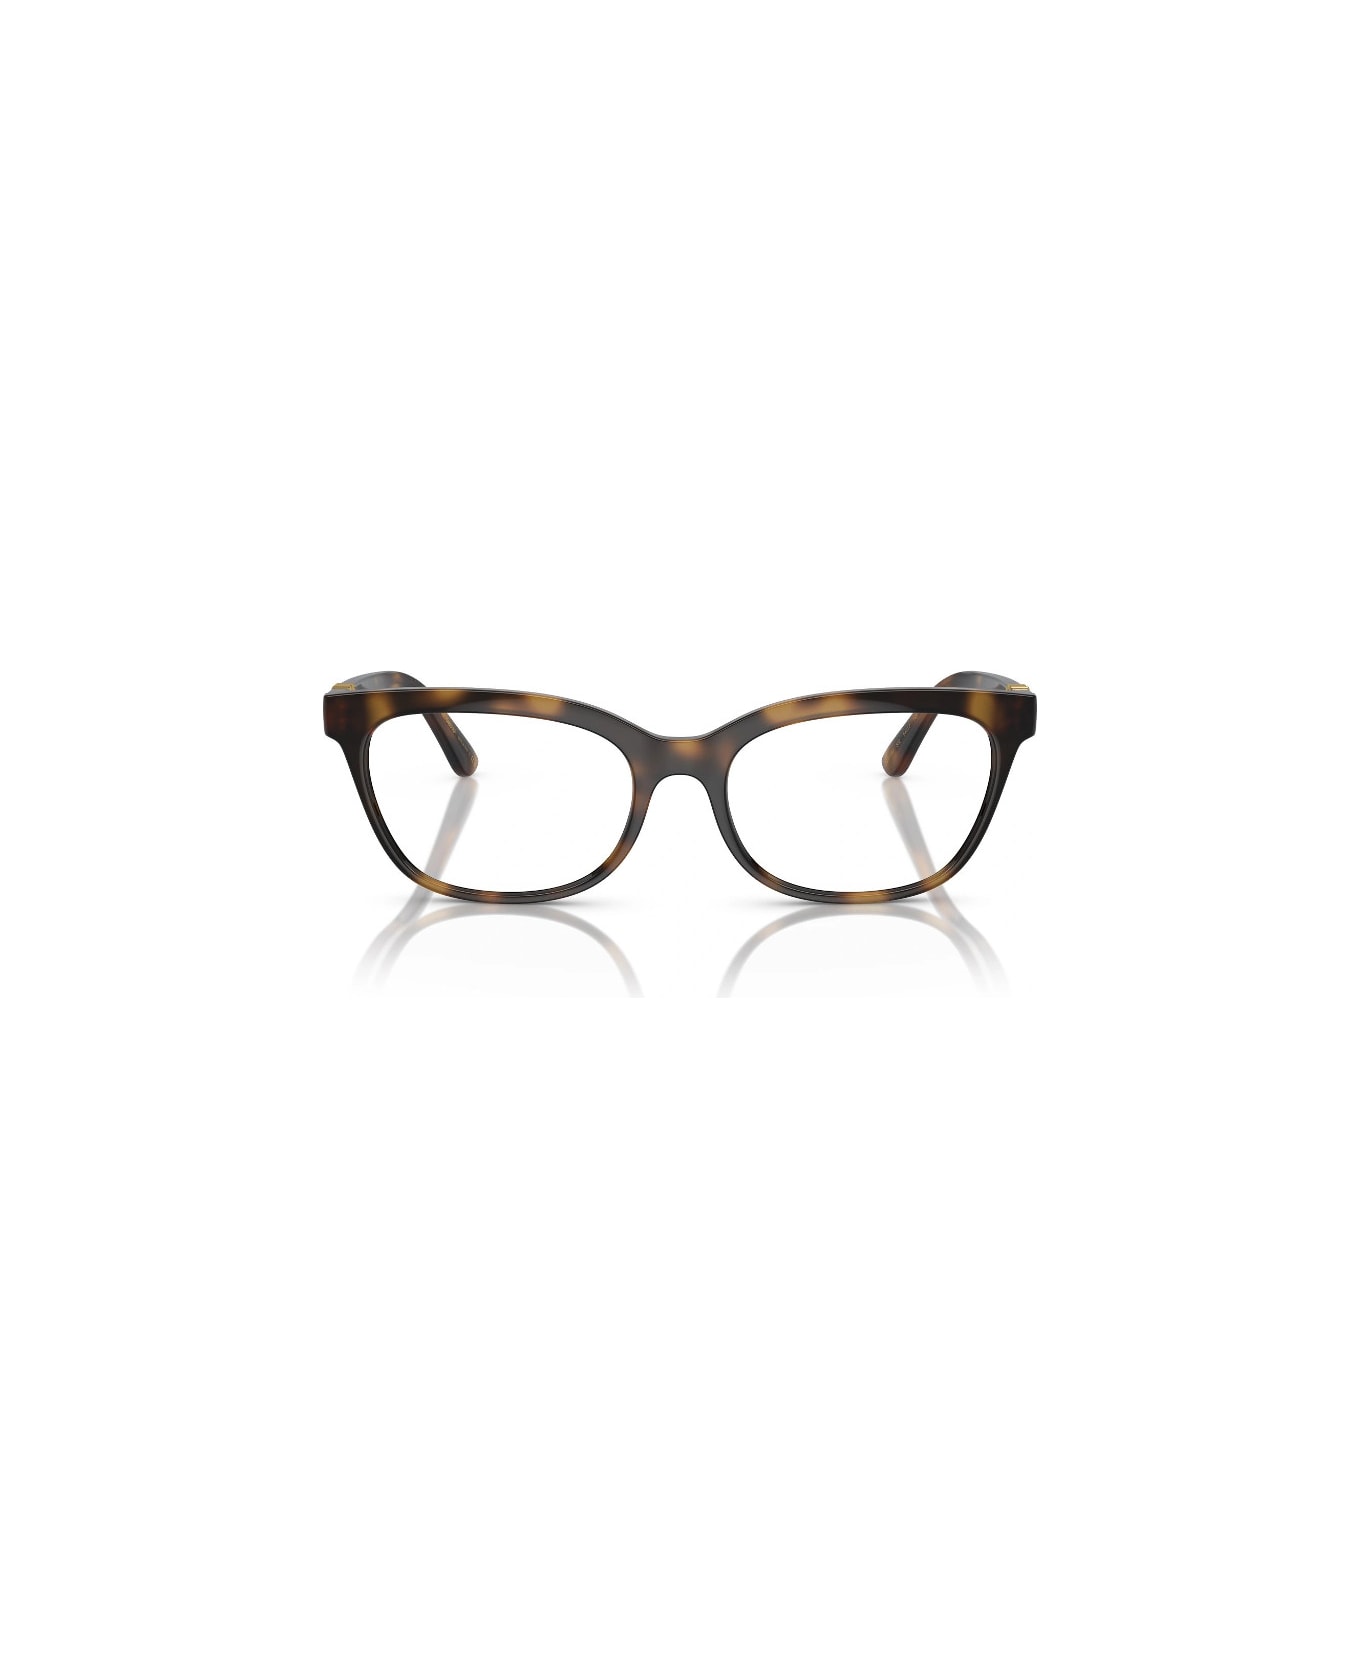 Dolce & Gabbana Eyewear DG5106 502 Glasses